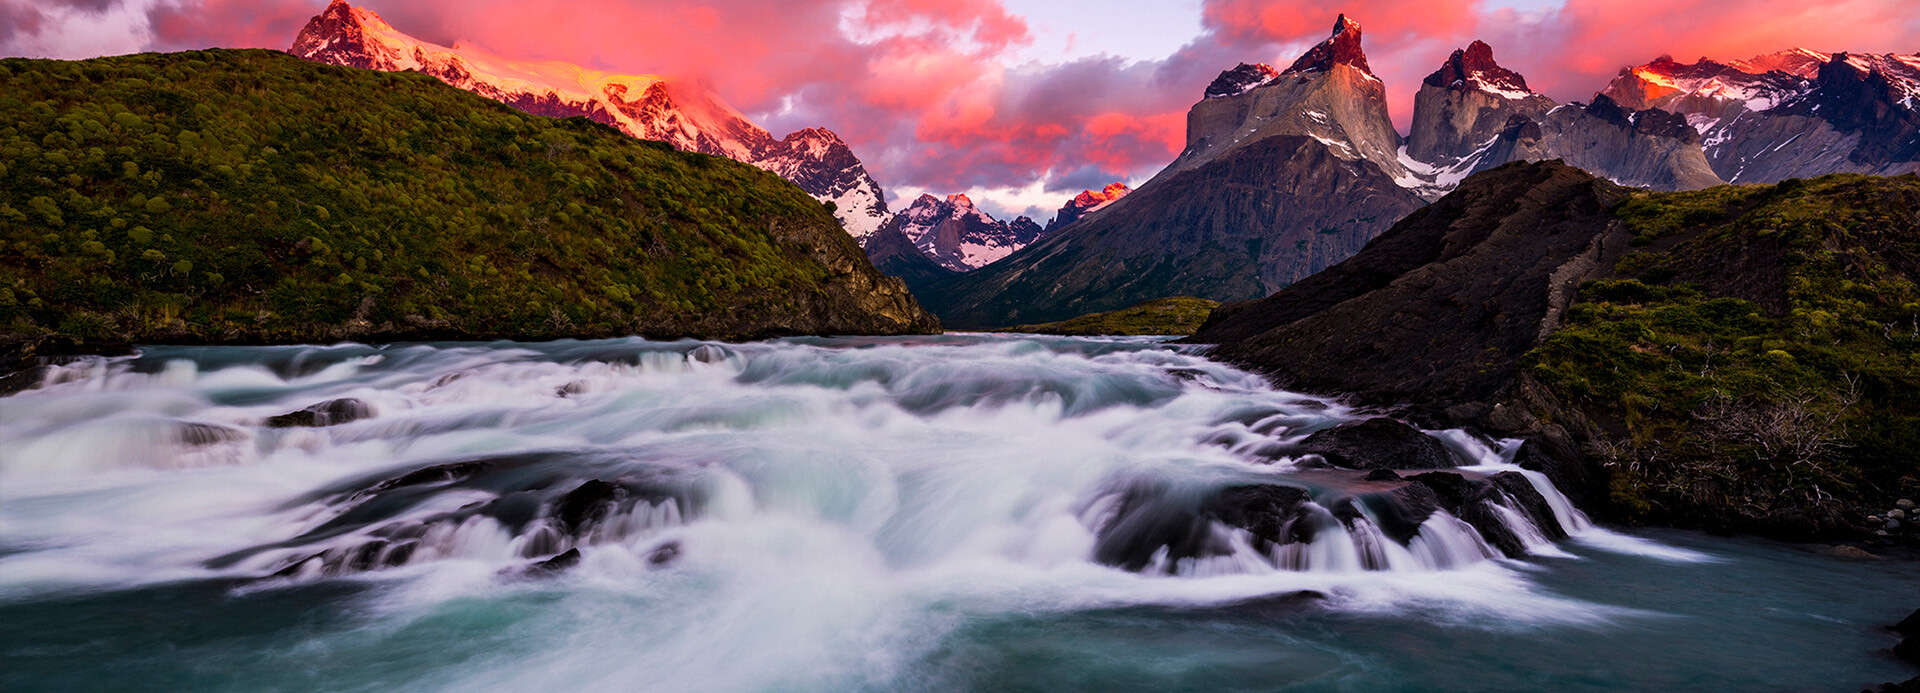 Patagonian Rivers